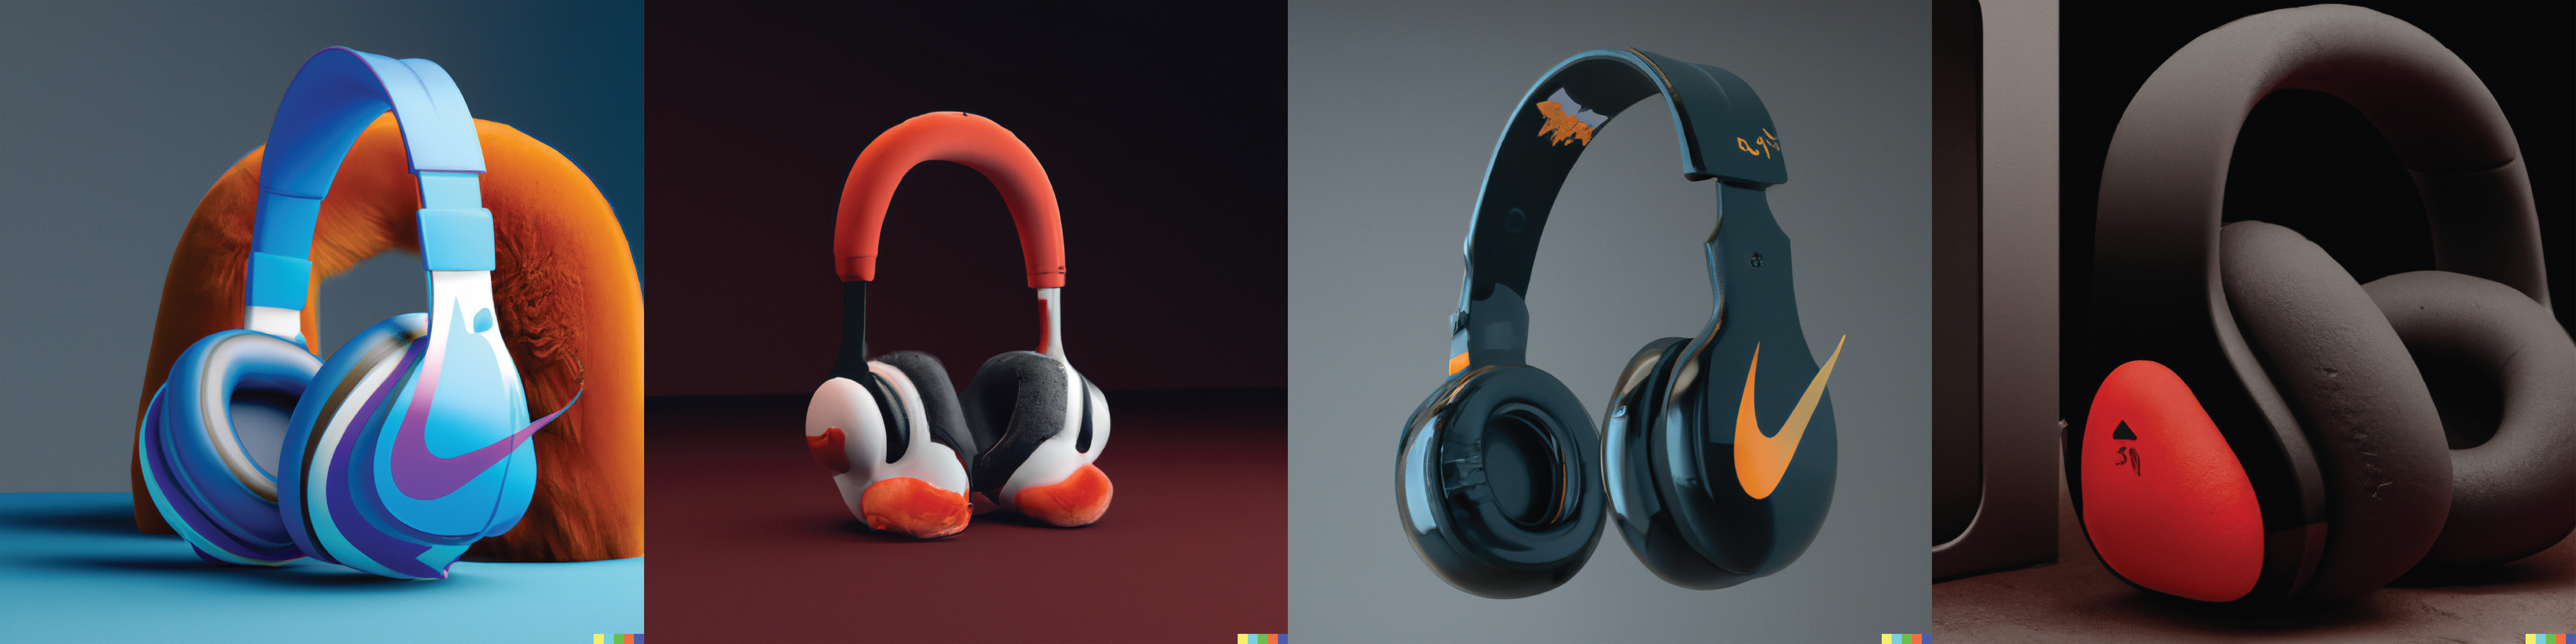 Render of headphones with Nike design